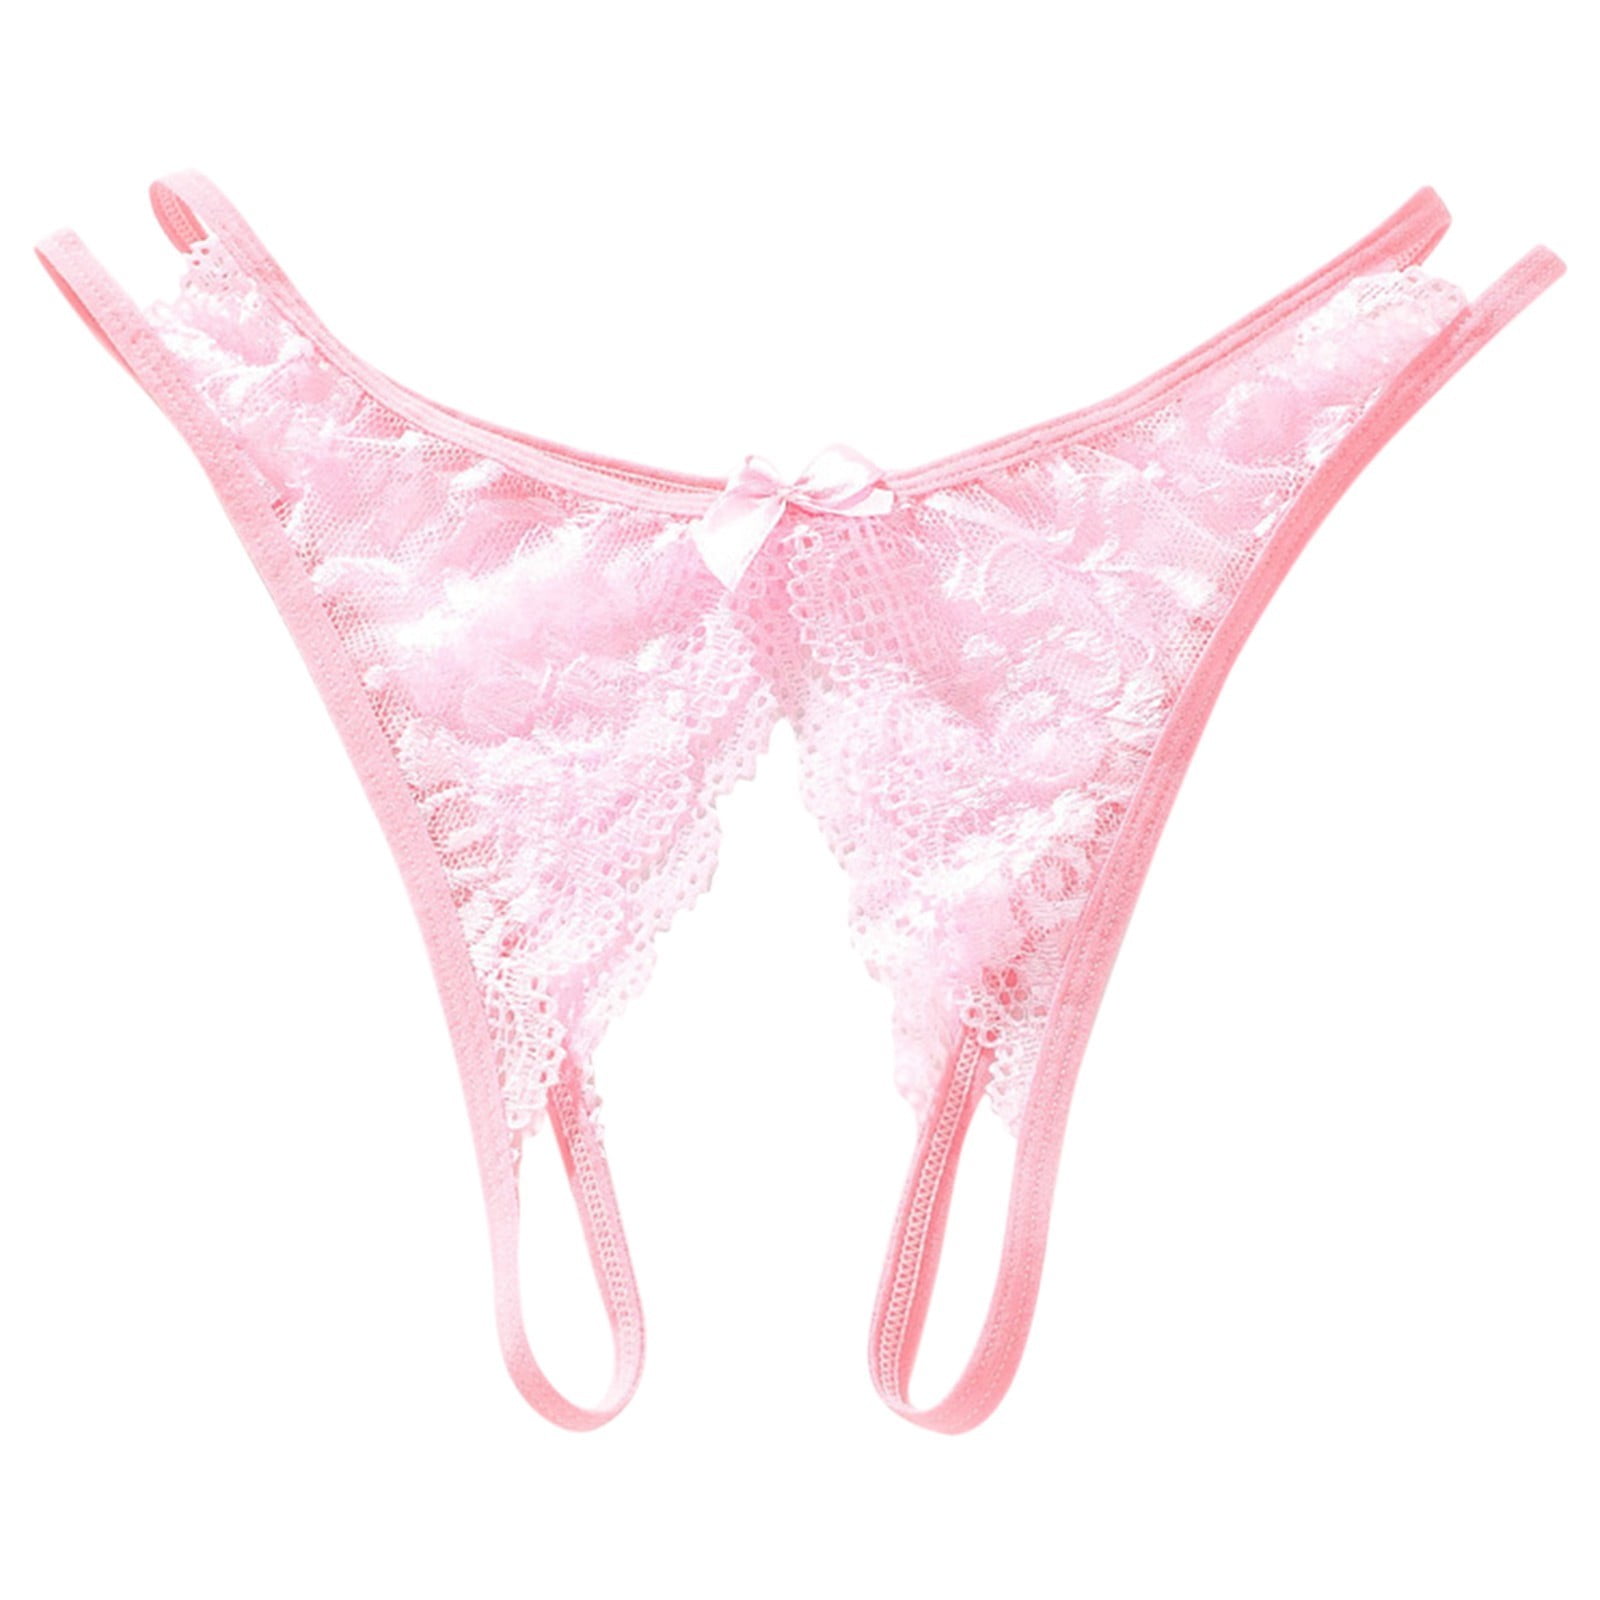 ASEIDFNSA Lady T Shaped Bottom Opening Crotch Underpants Women Underwear  Floral Lace Underwear Pantys Lingerie Briefs Pink L 